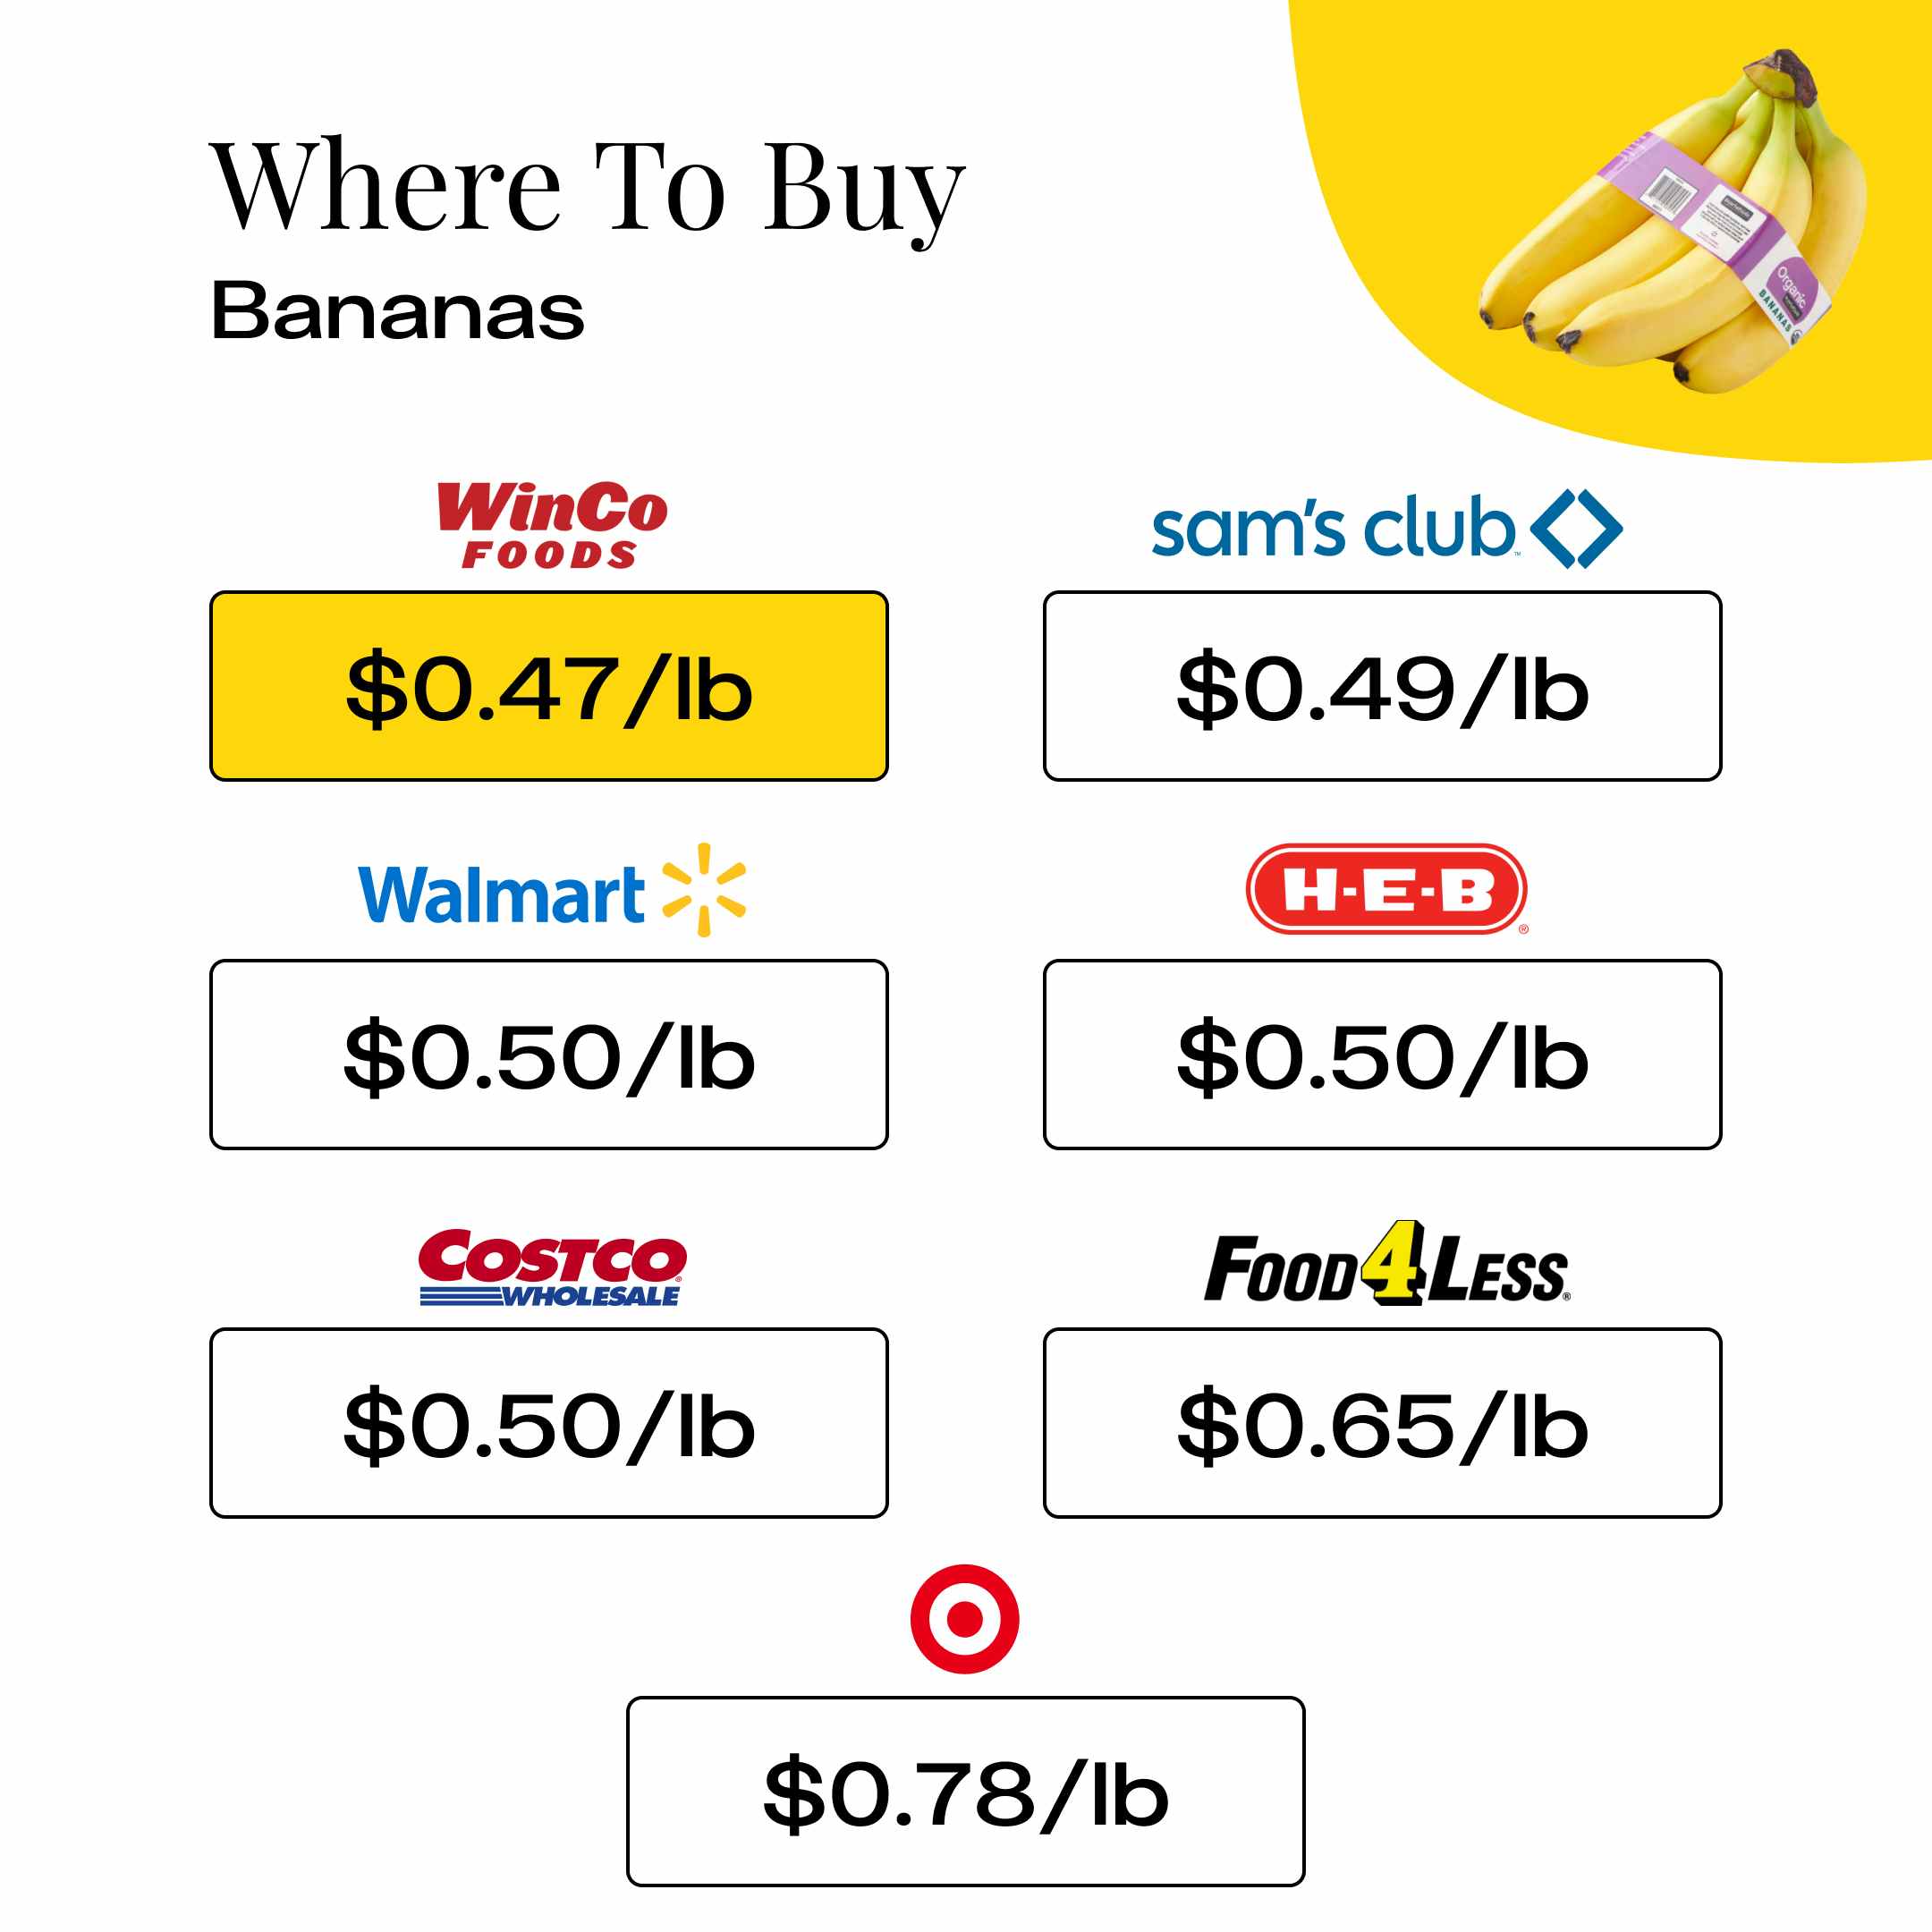 Where To Buy Bananas